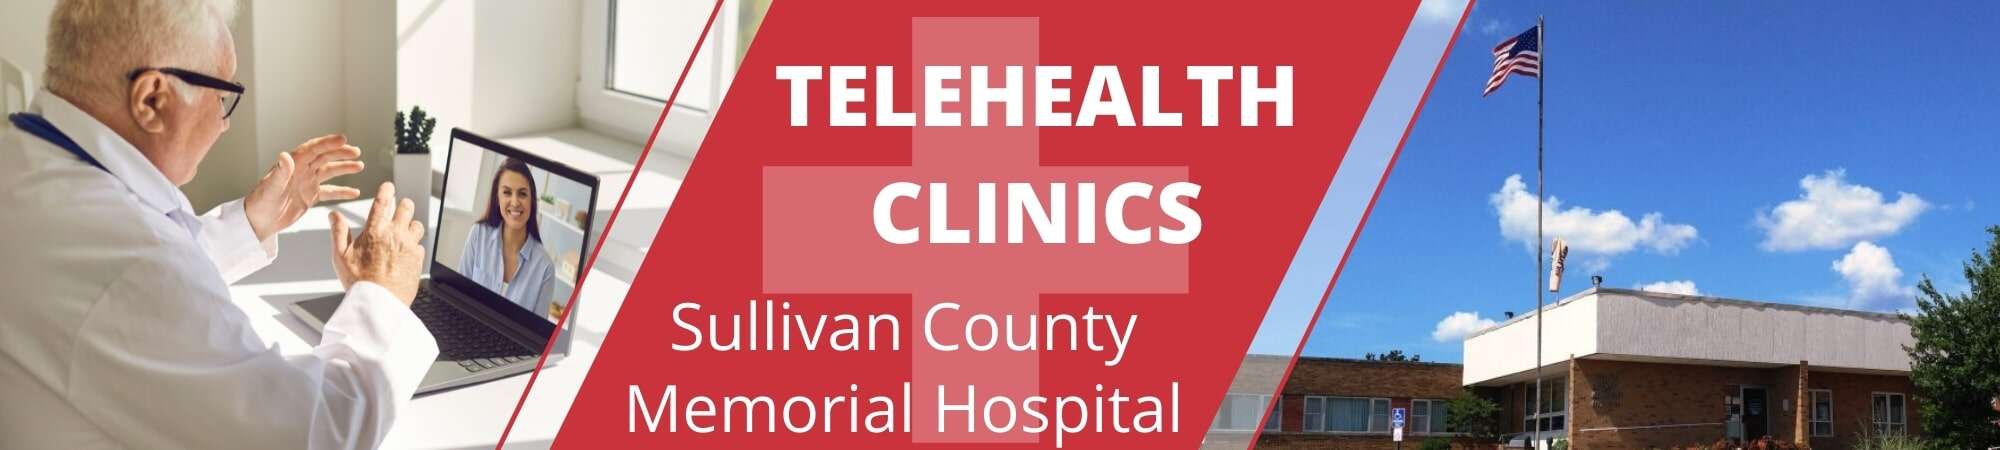 Telehealth Clinic Sullivan County Memorial Hospital